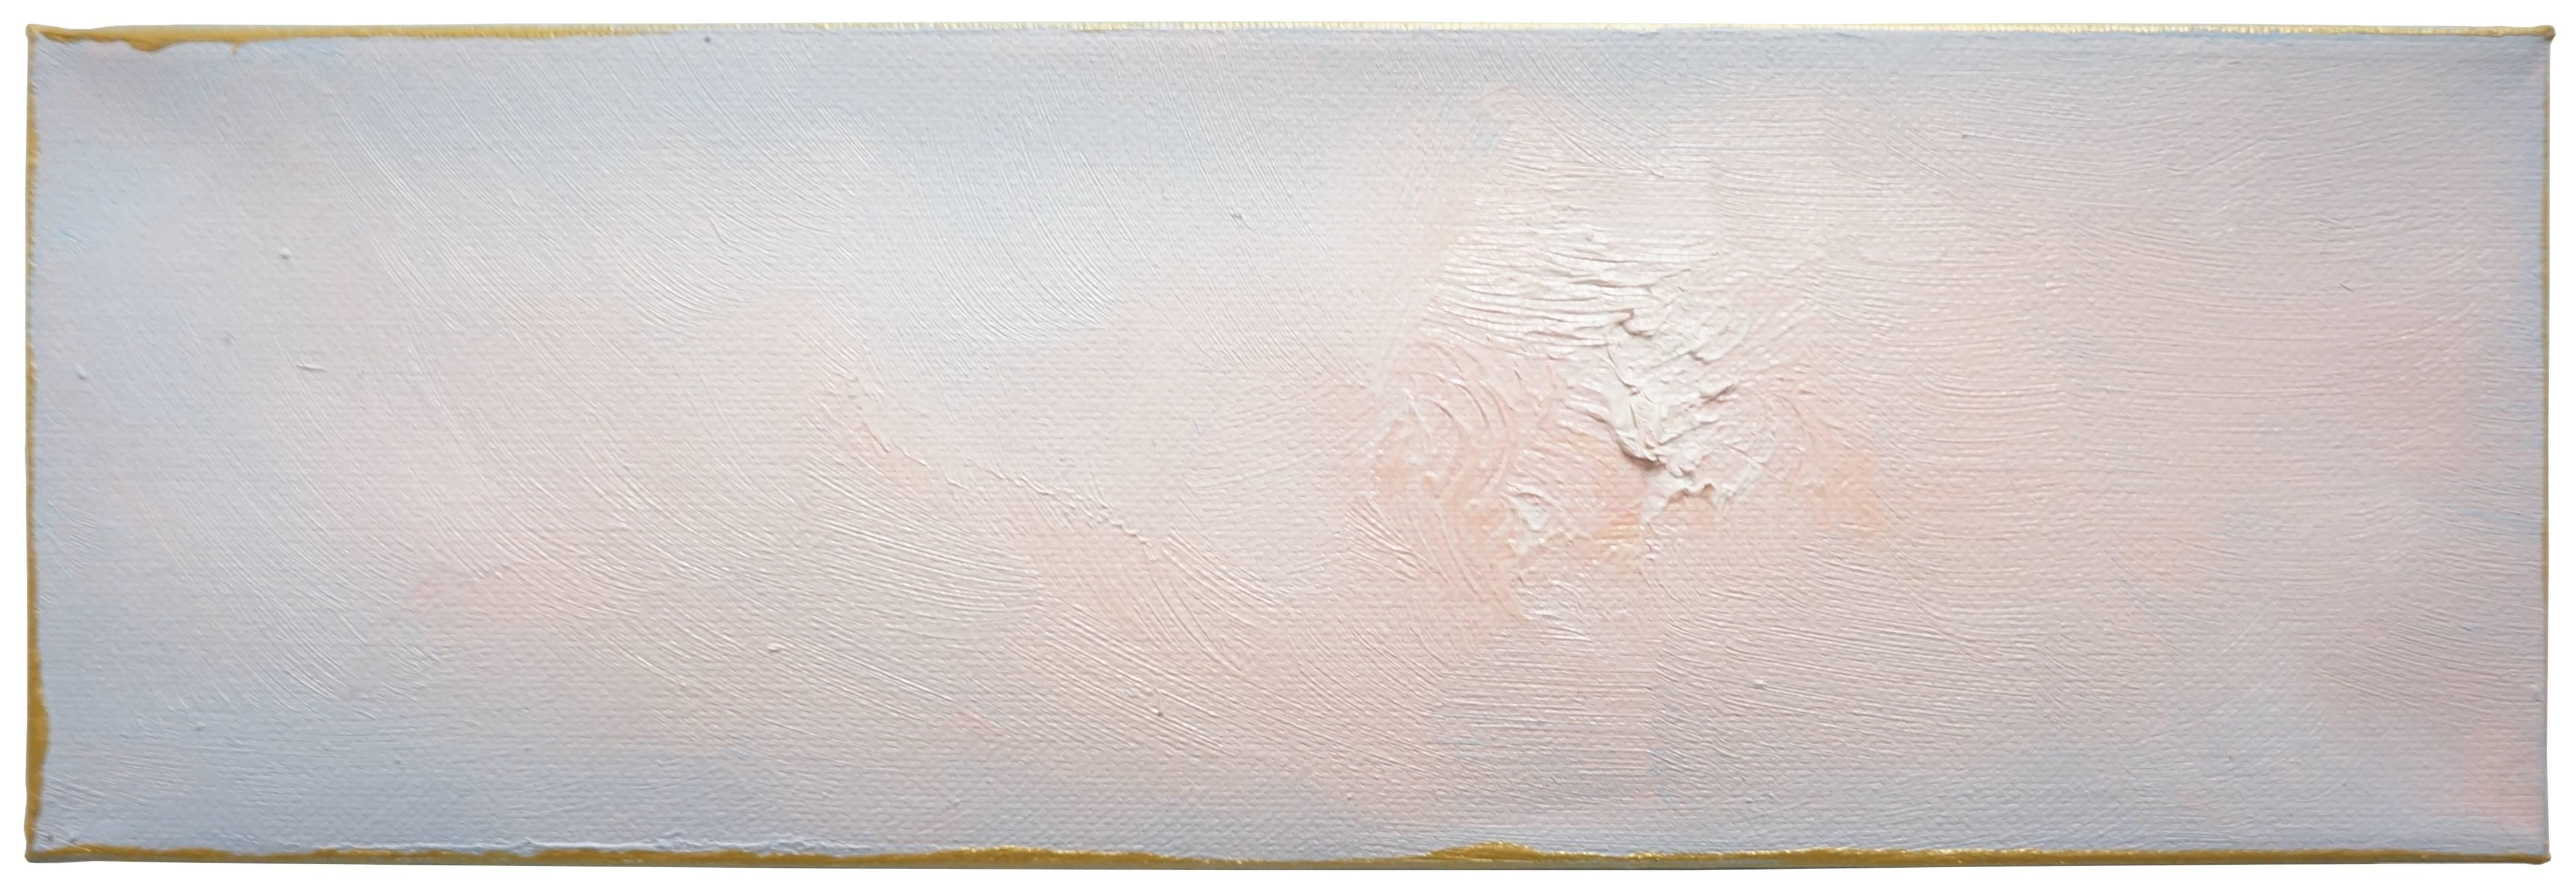 Julie Hedrick Abstract Painting - FRESH AIR - SKY BURST AT DAWN